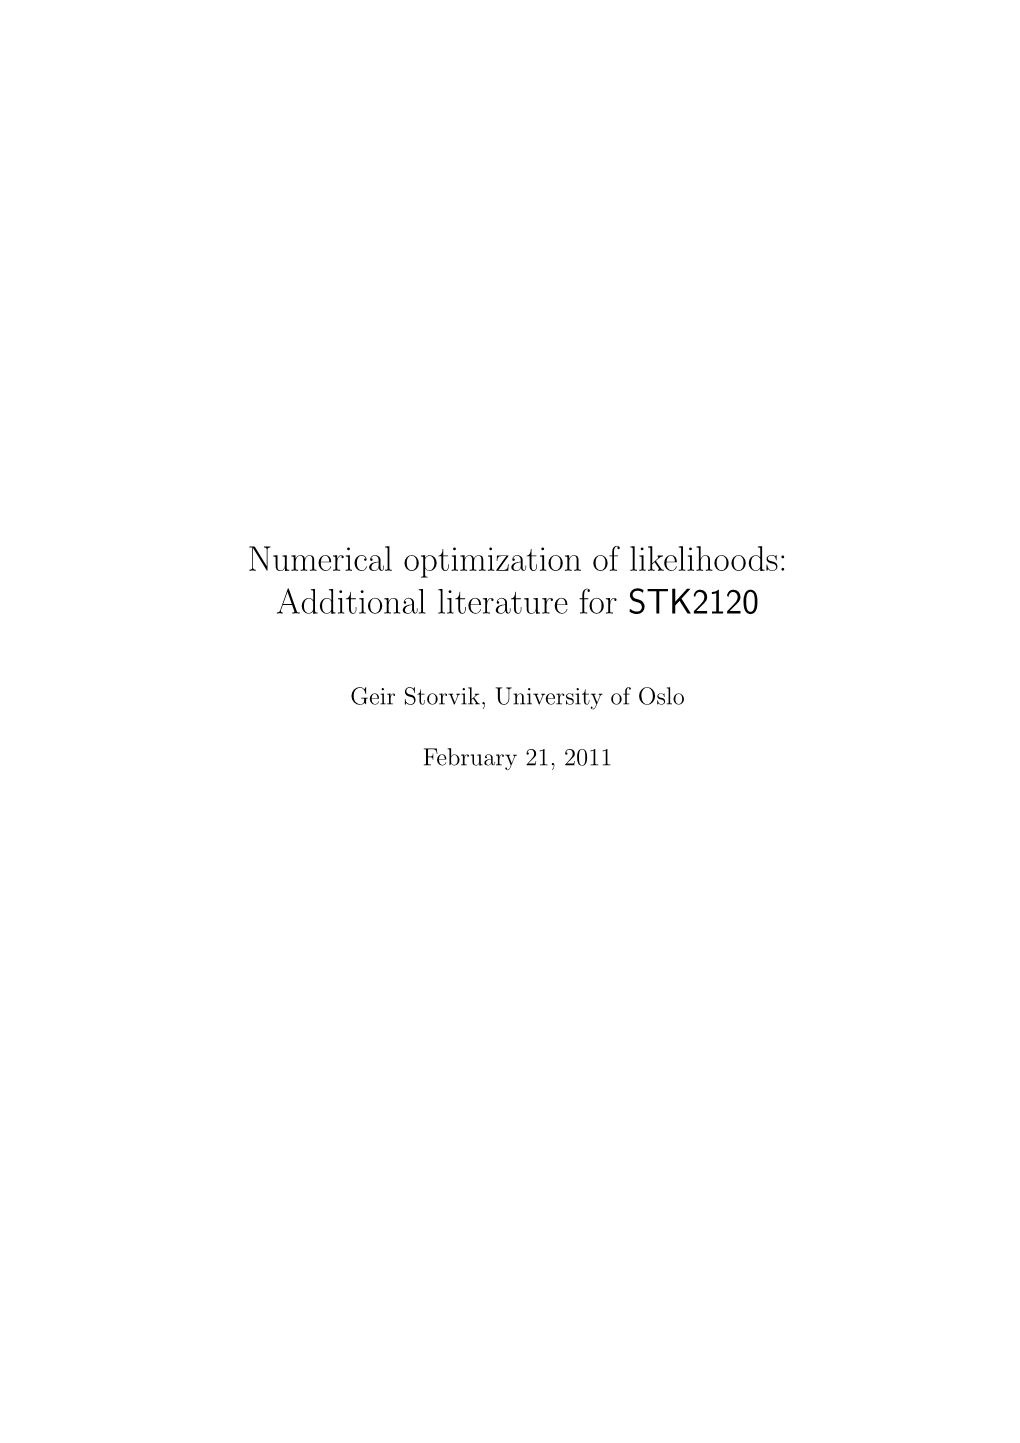 Numerical Optimization of Likelihoods: Additional Literature for STK2120